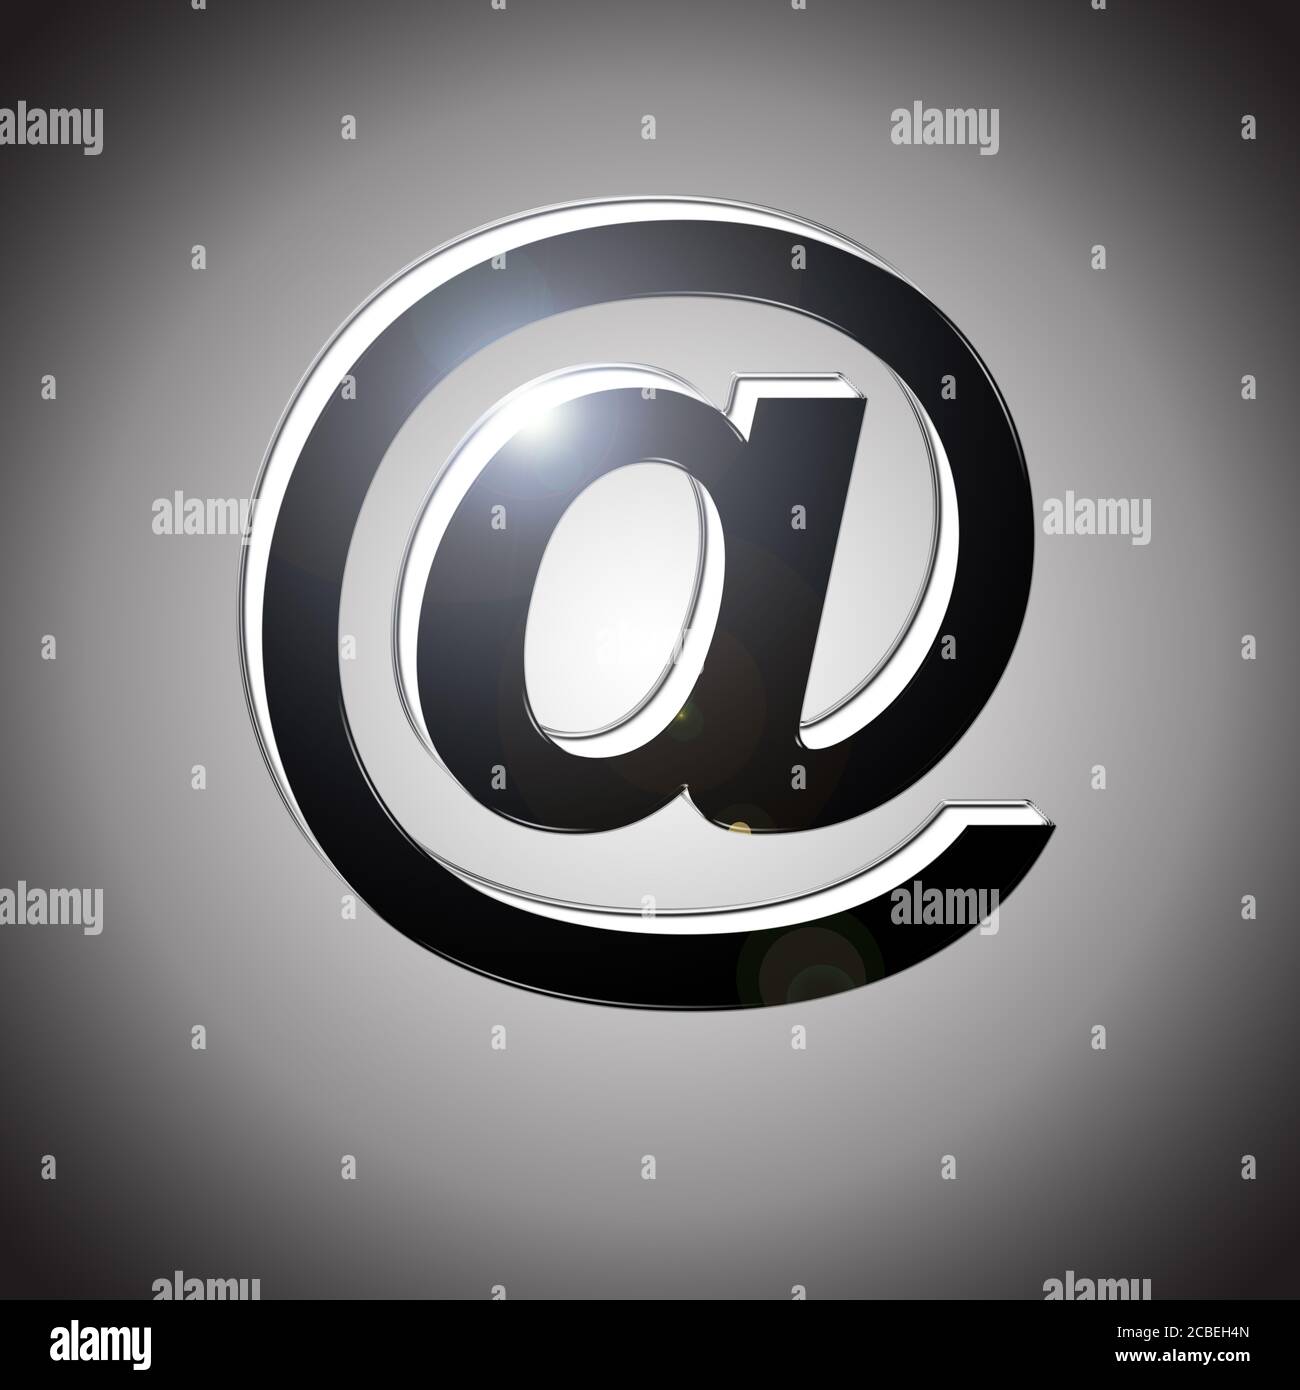 E-Mail logo Stock Photo